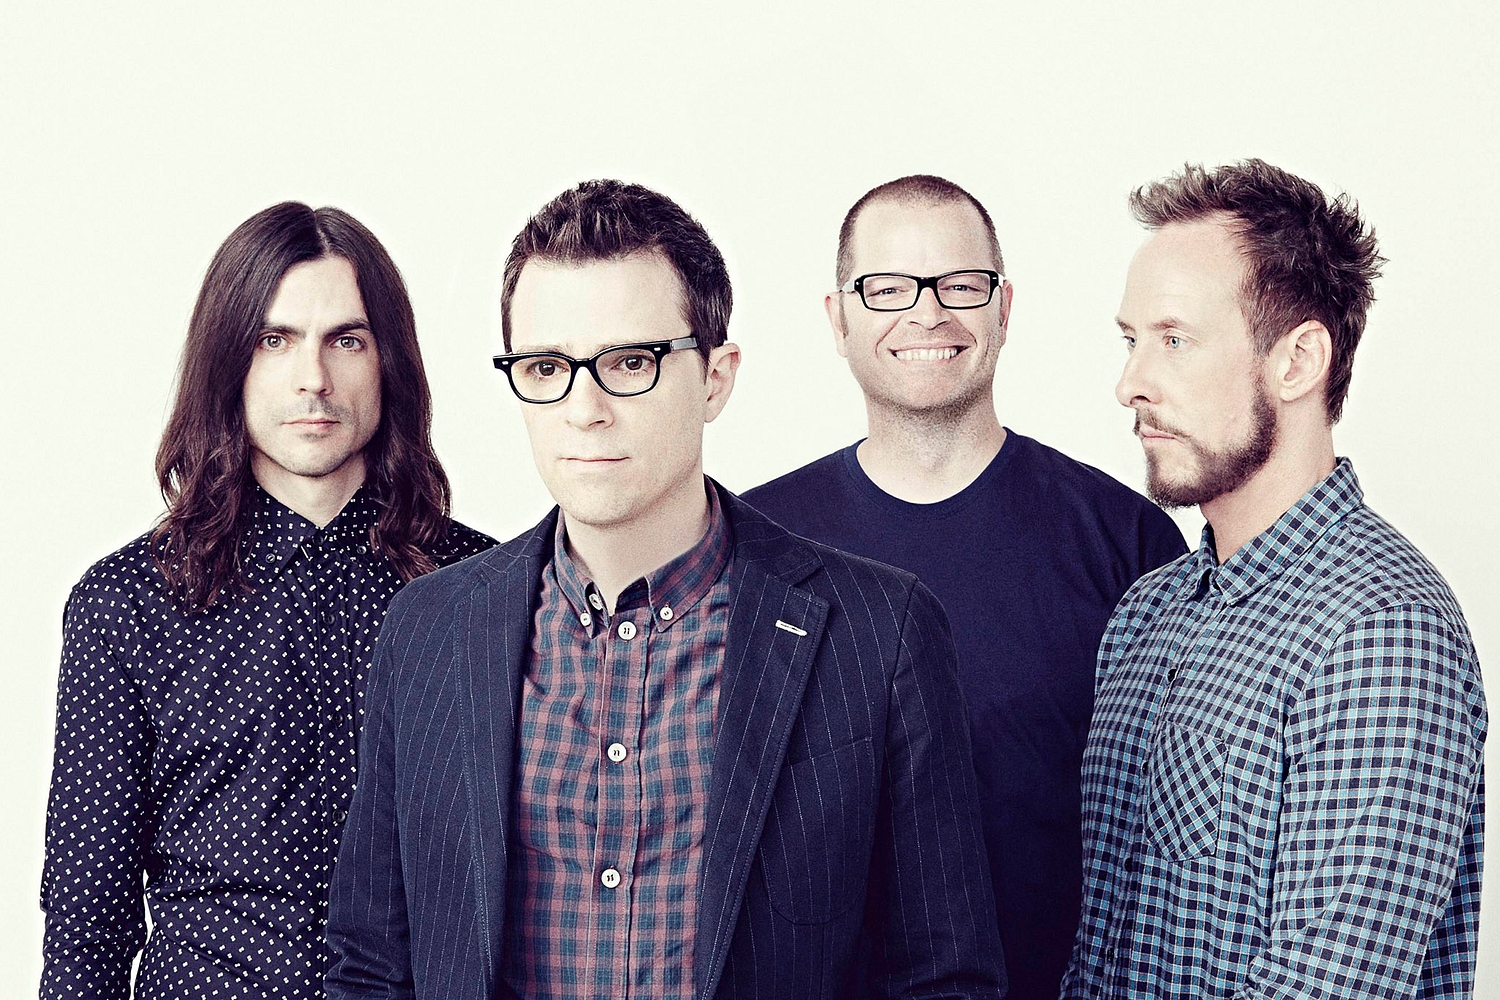 New Weezer track ‘Everybody Needs Salvation’ surfaces online